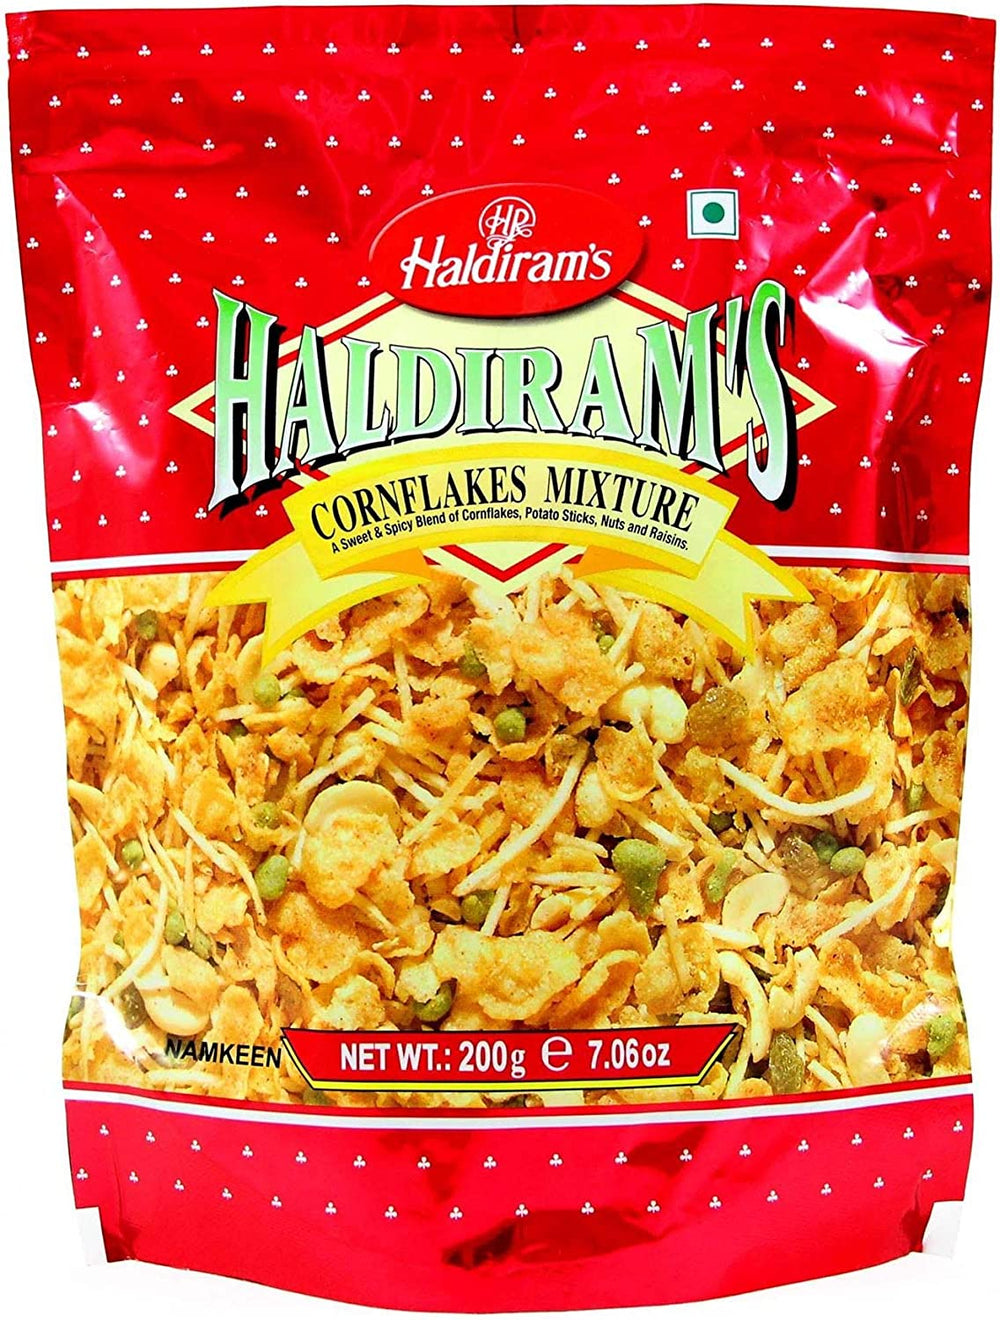 Haldiram's Cornflakes Mixture 200g